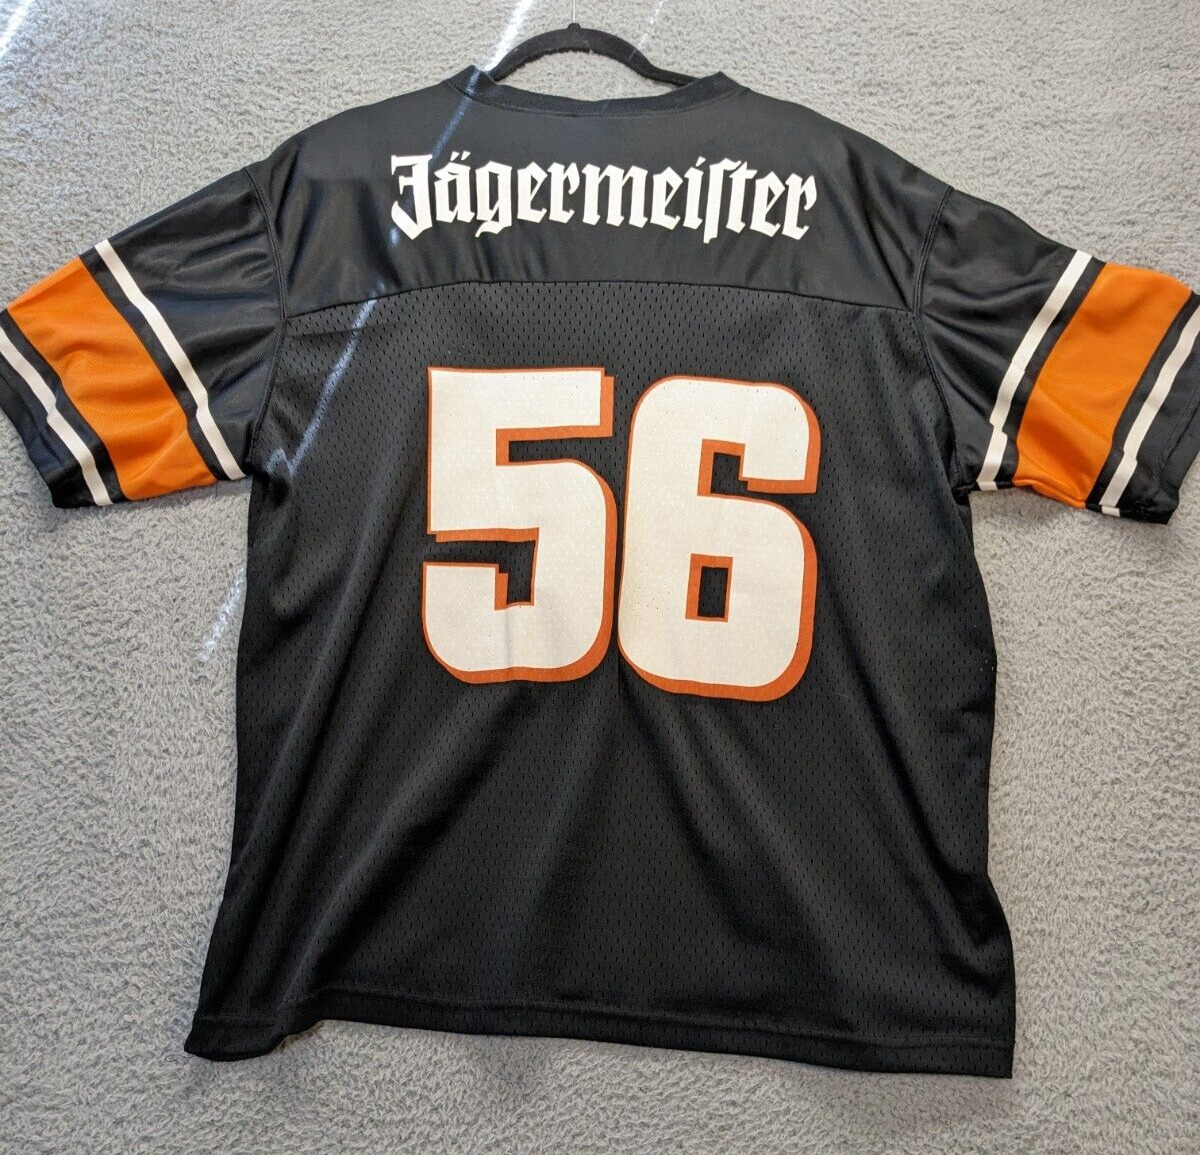 Jagermeister Men's Football Jersey #56 Black Orange Short Sleeve Size Large